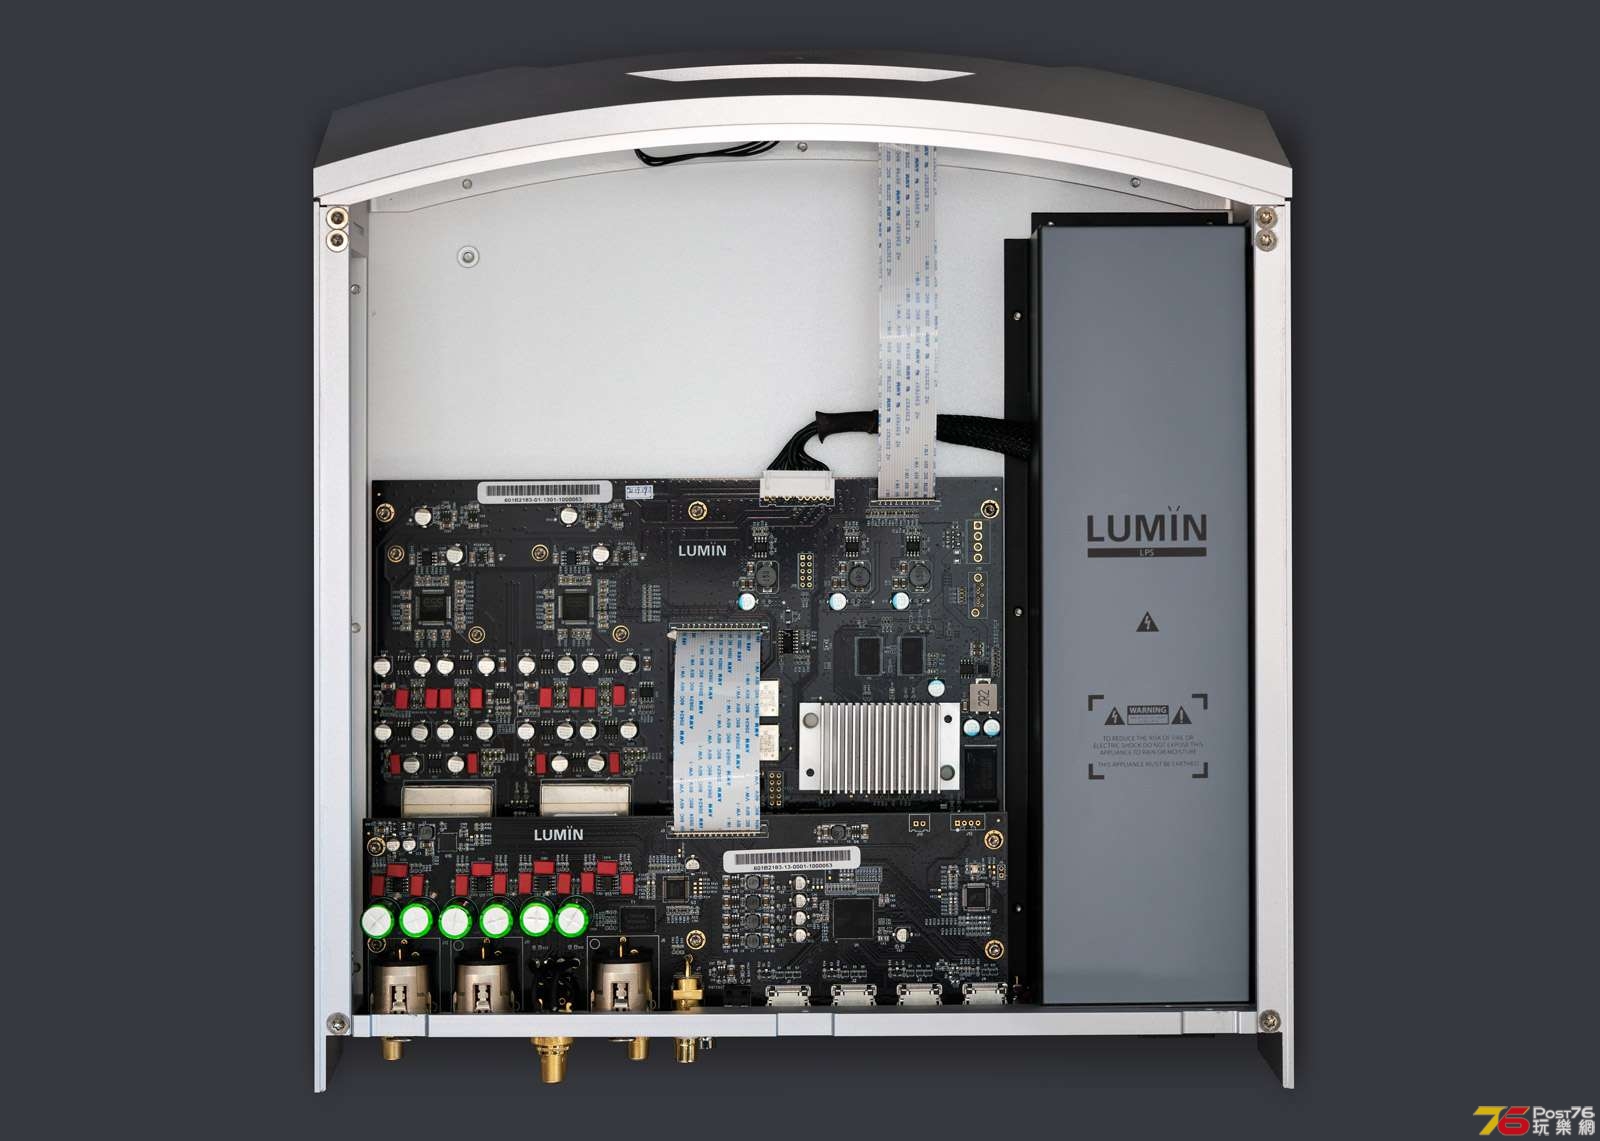 LUMIN-P1-inside.jpg